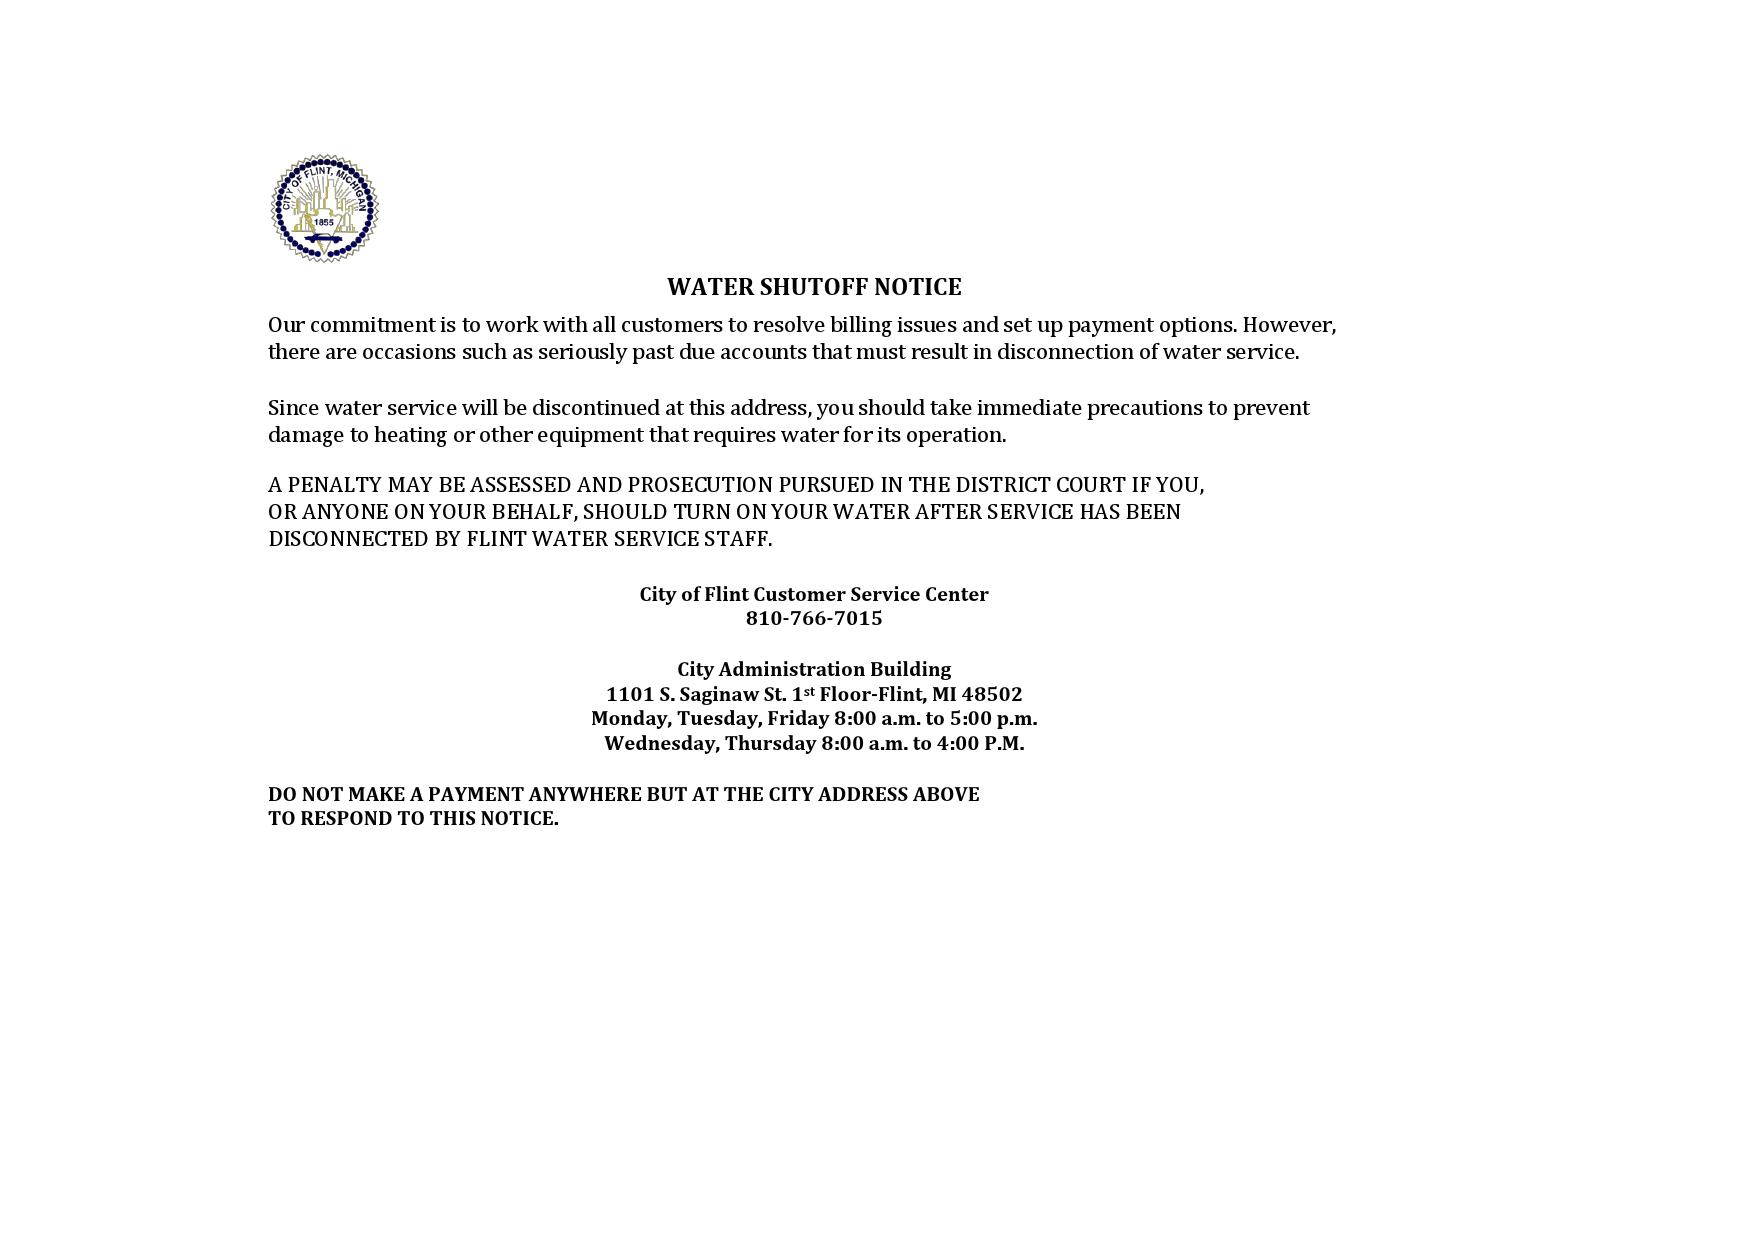 USA City of Flint Michigan water utility bill shutoff notice, Word and PDF template, version 3